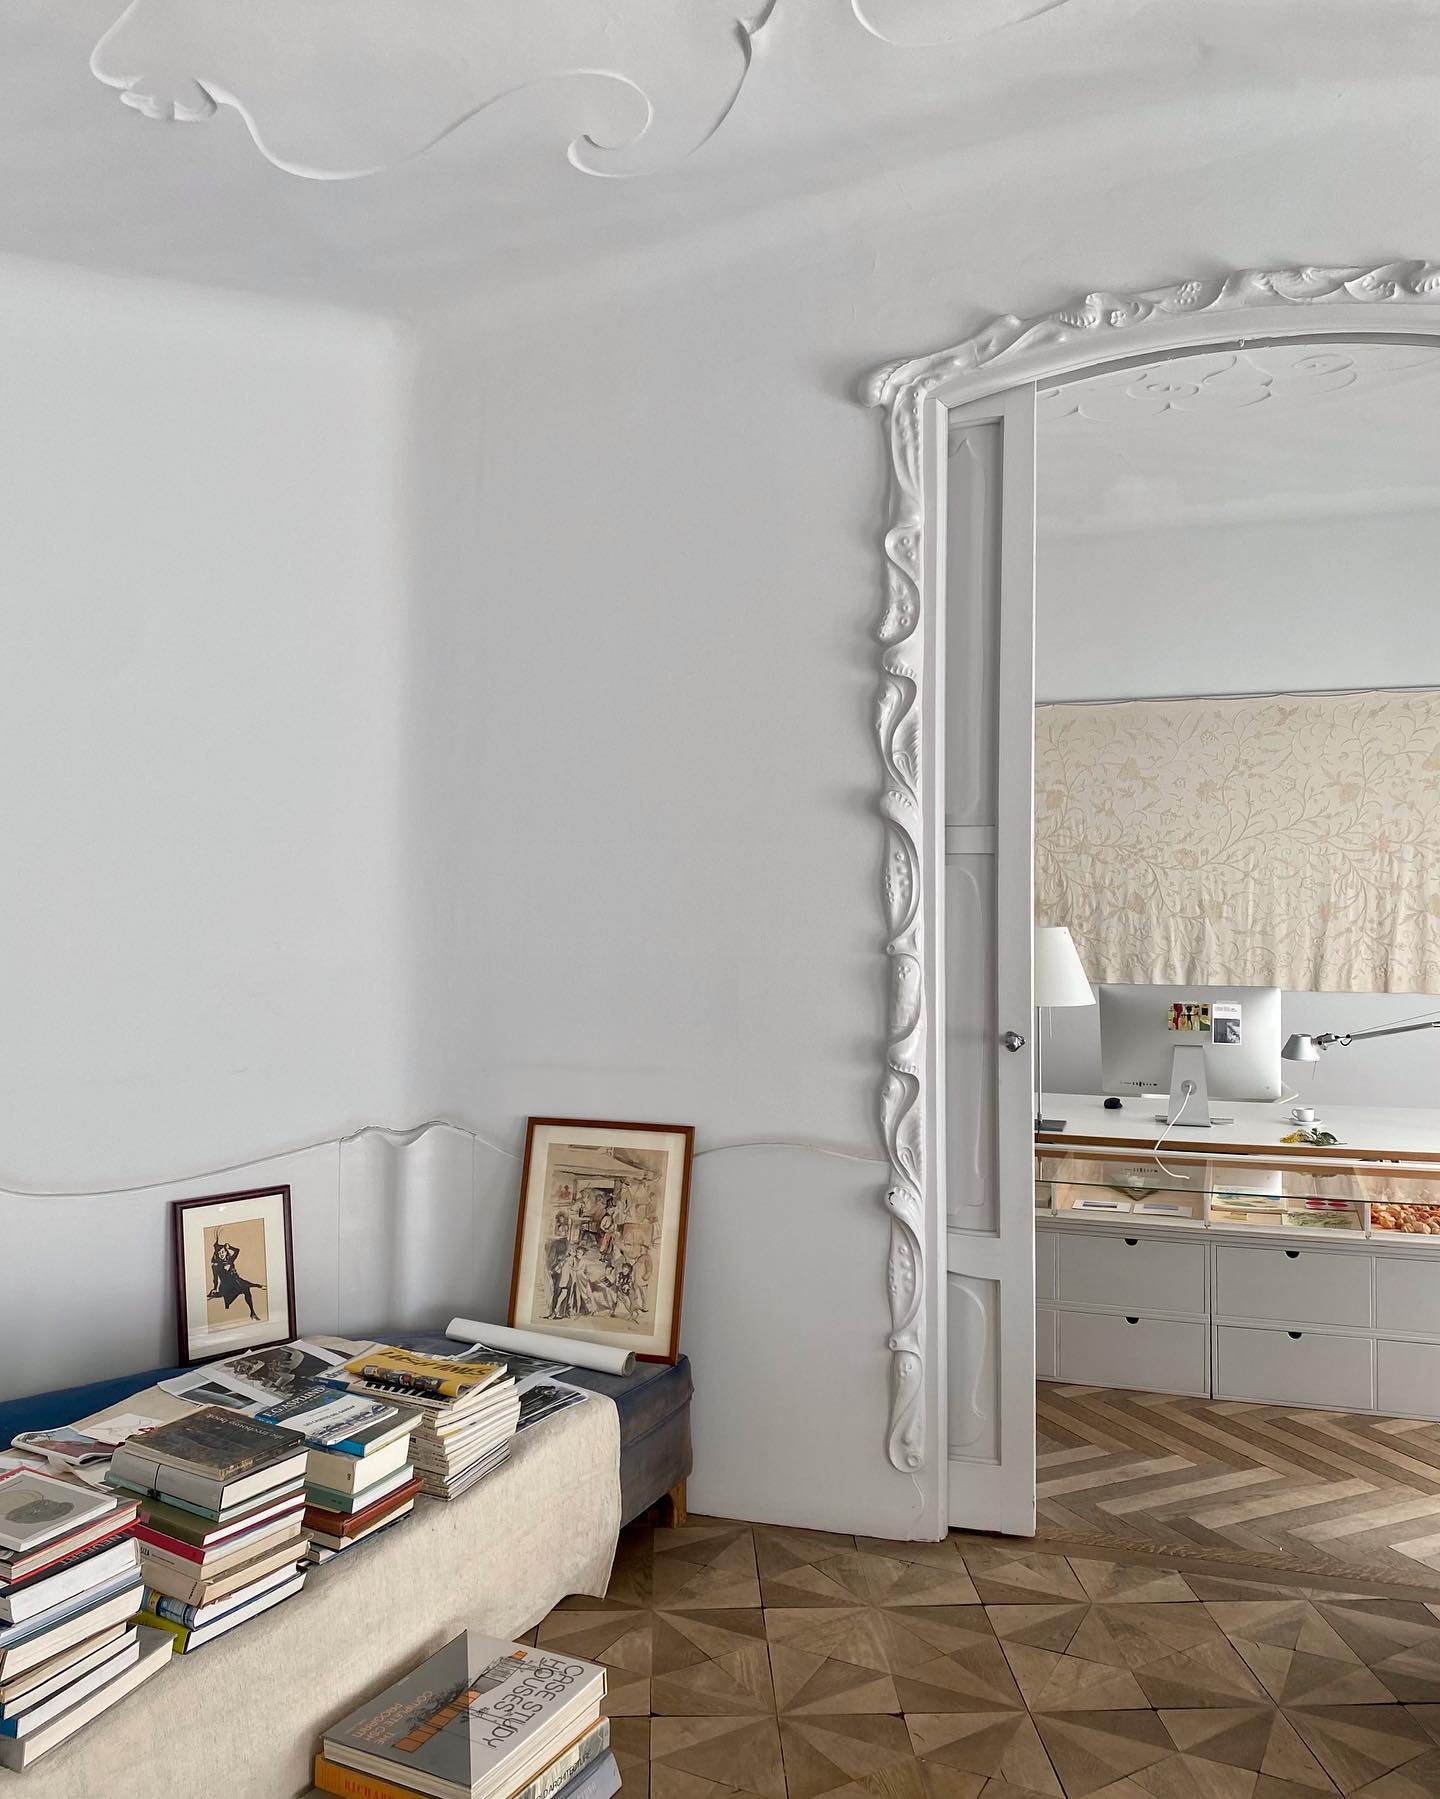 Design History | Décor Inspiration: The Last Resident of Casa Milà, Barcelona